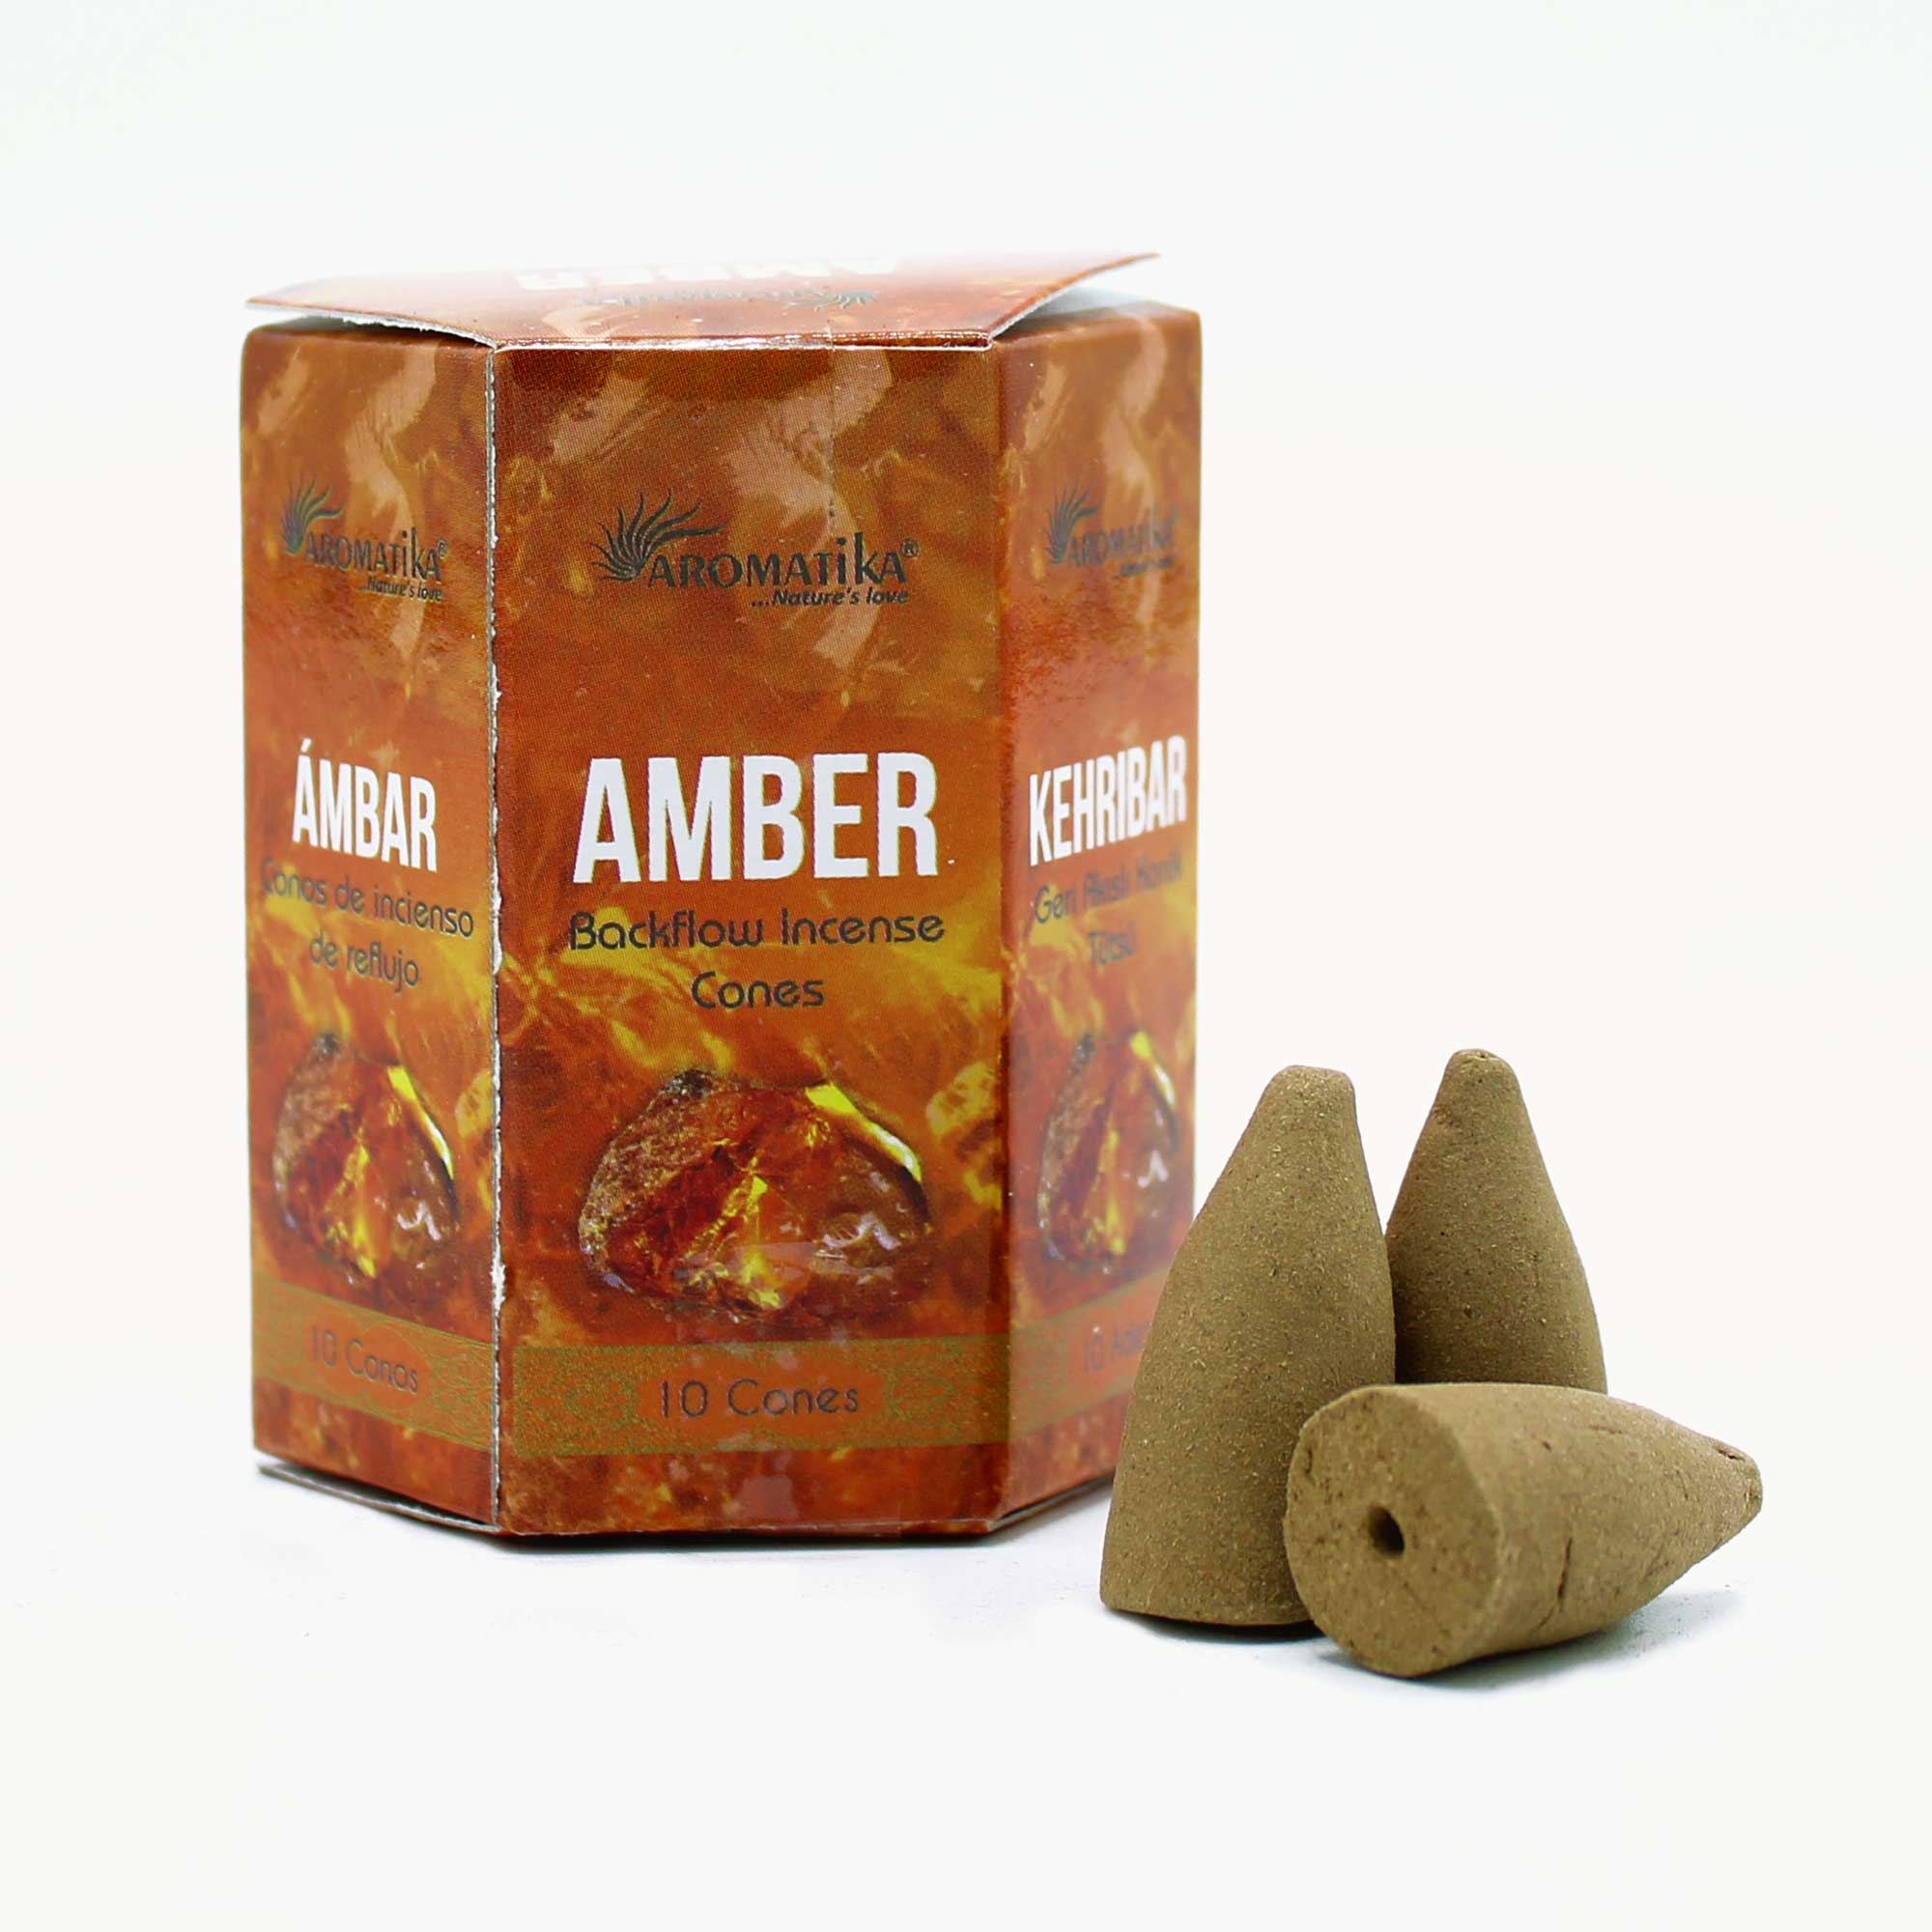 View Pack of 10 Masala Backf10 Incense Amber information